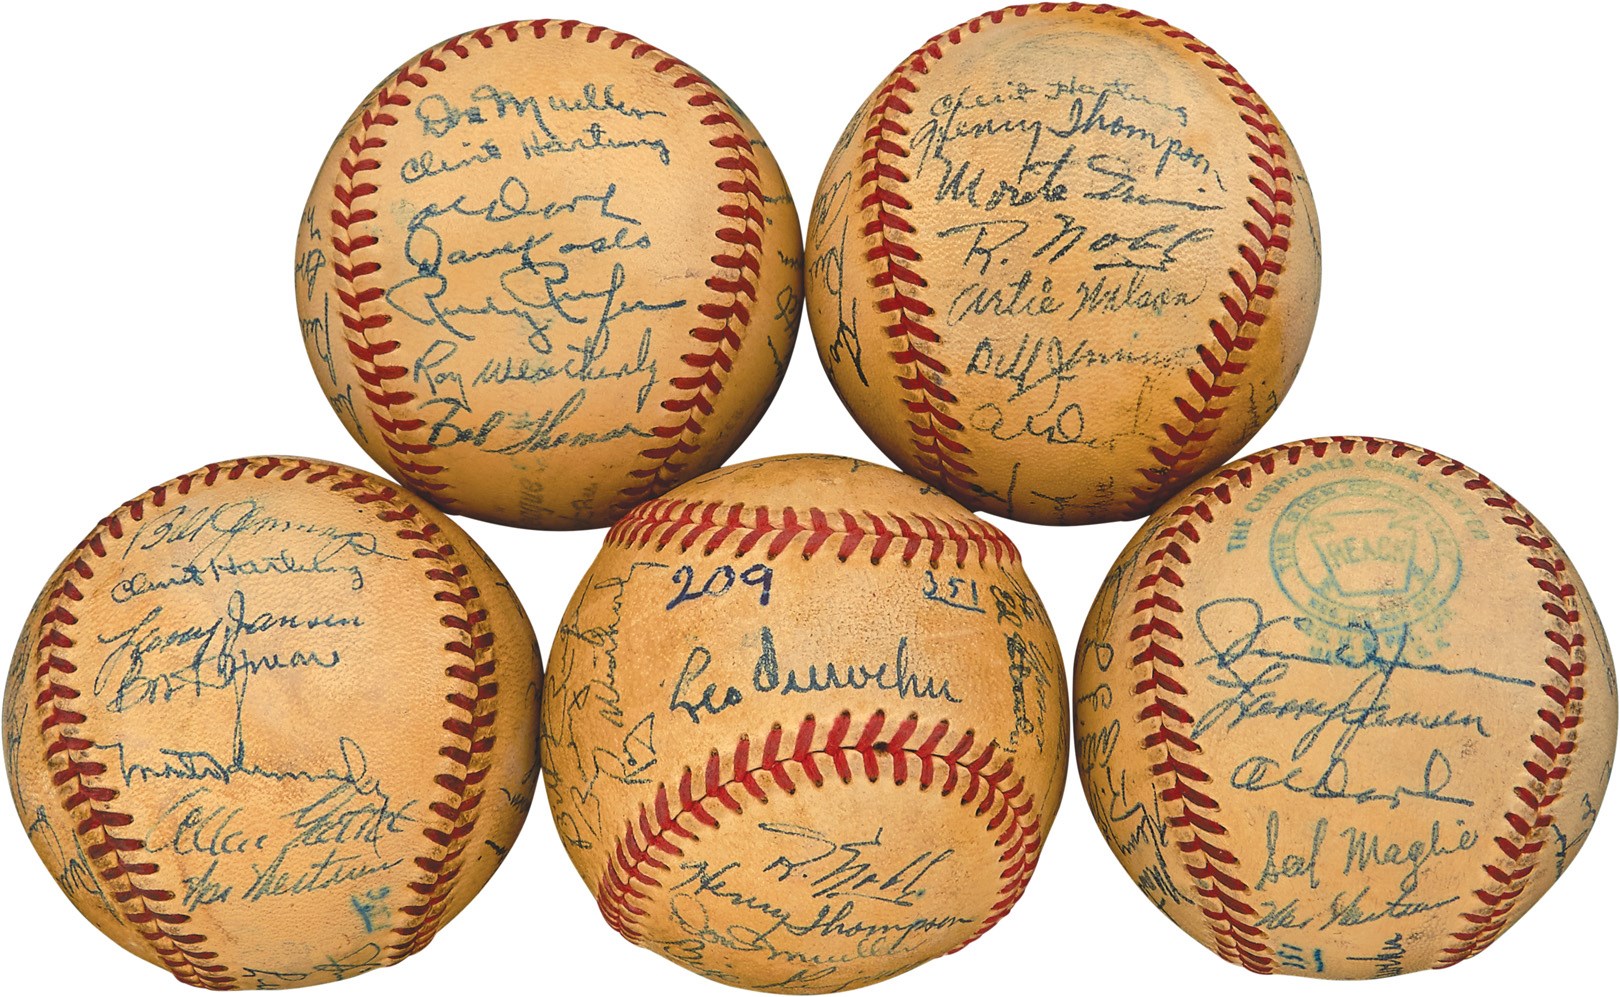 - 1951 National League Champion NY Giants Team-Signed Baseballs (5)